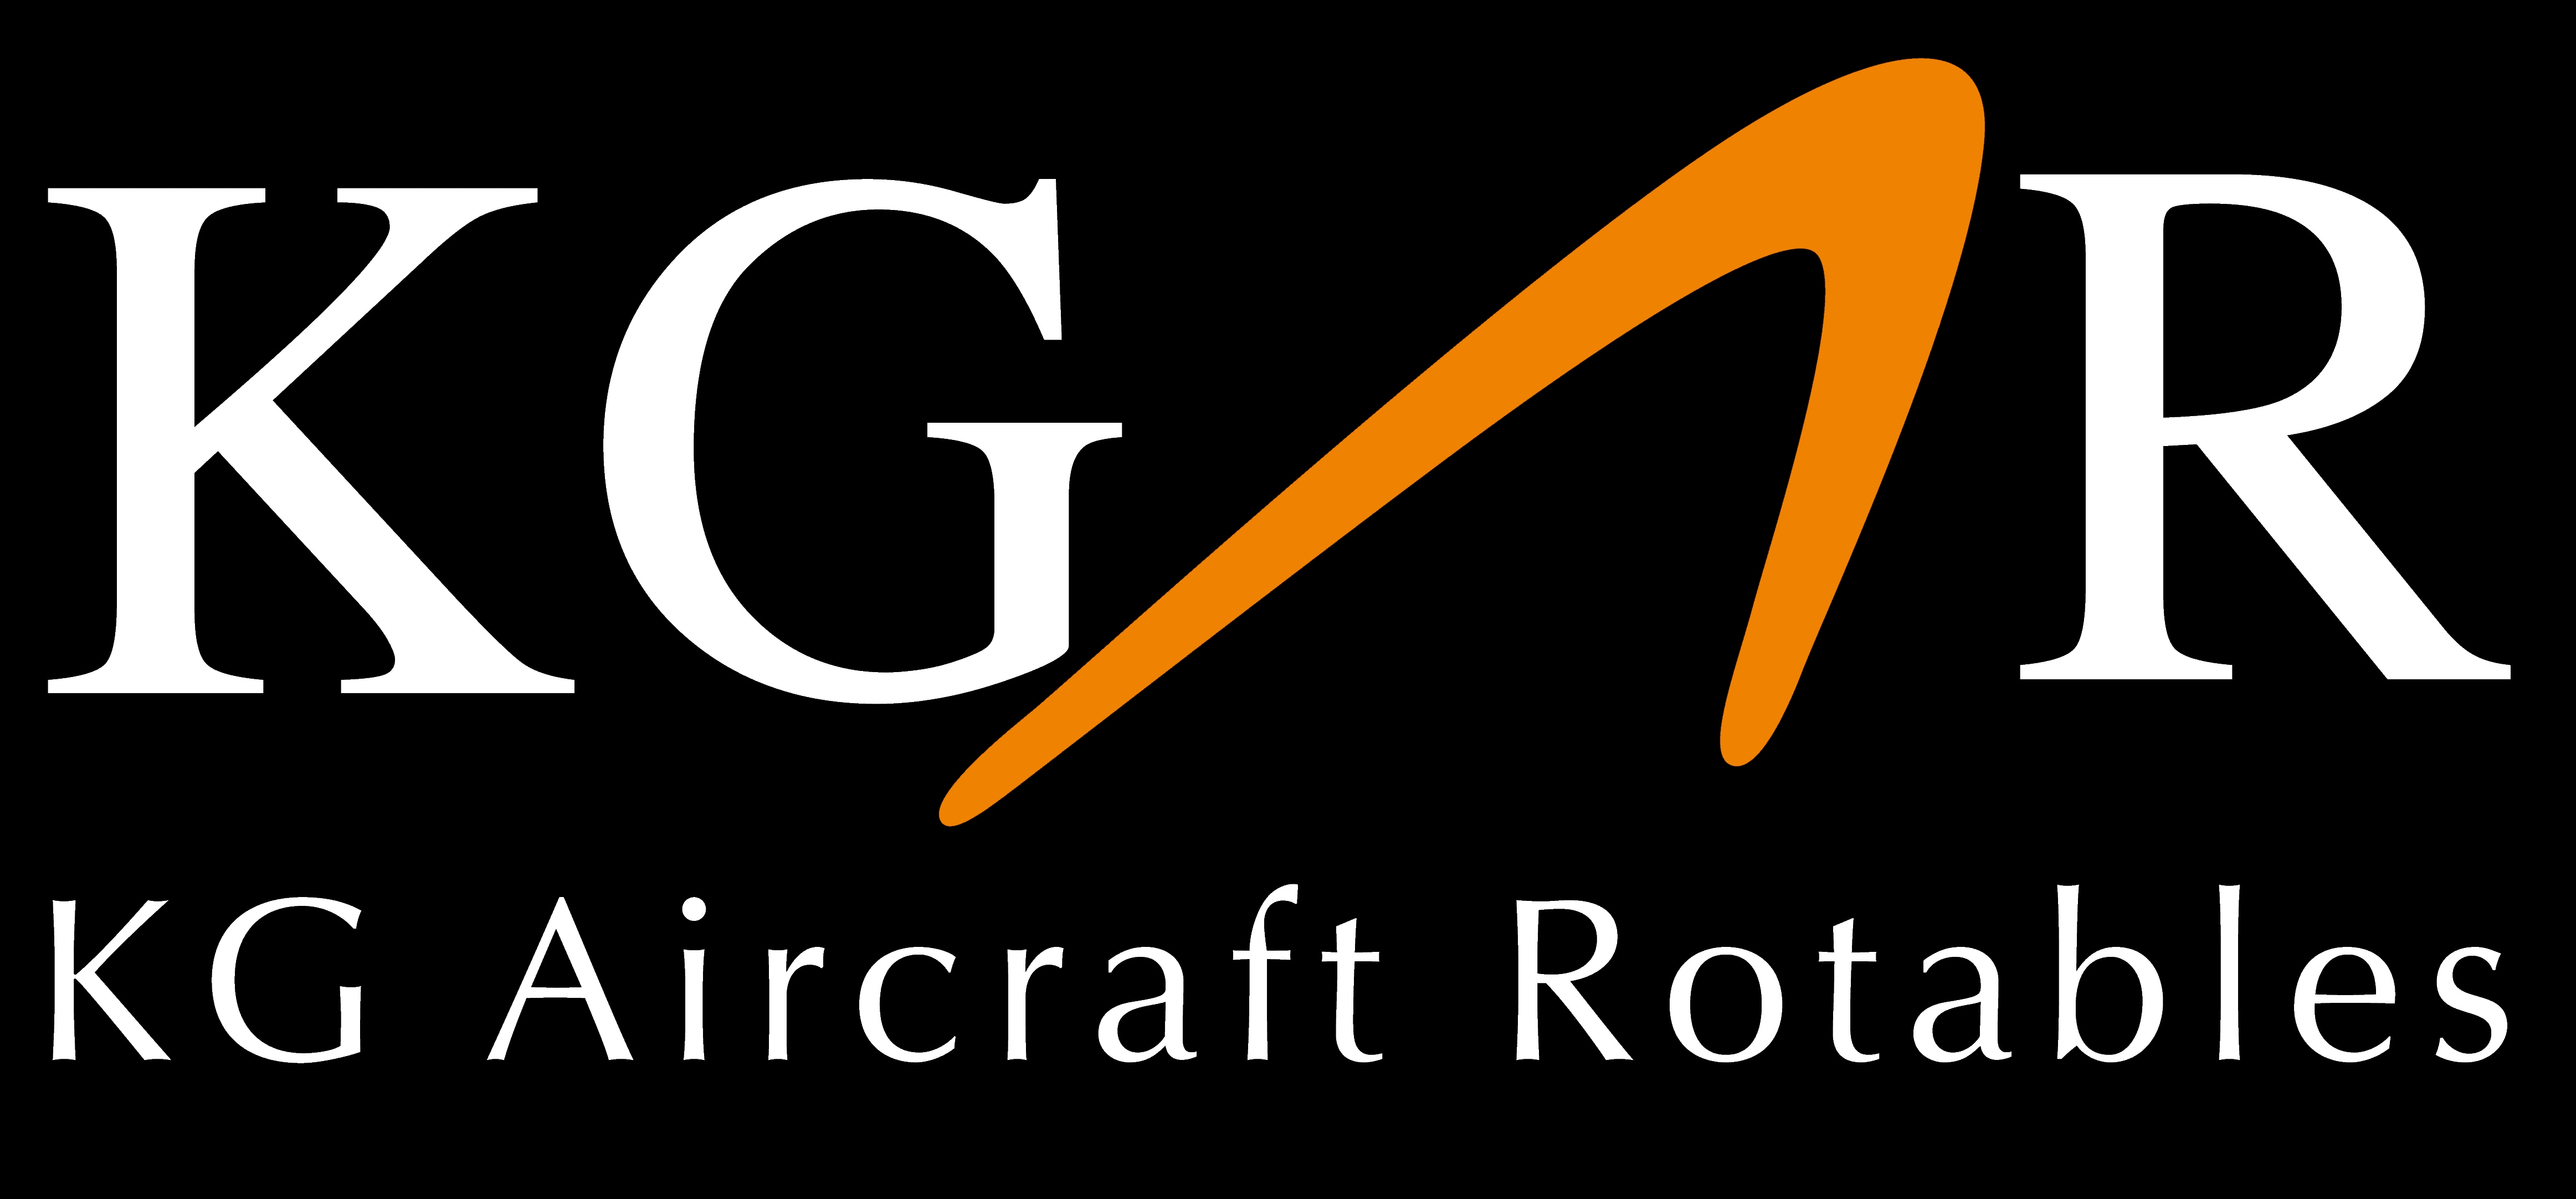 KG Aircraft Rotables